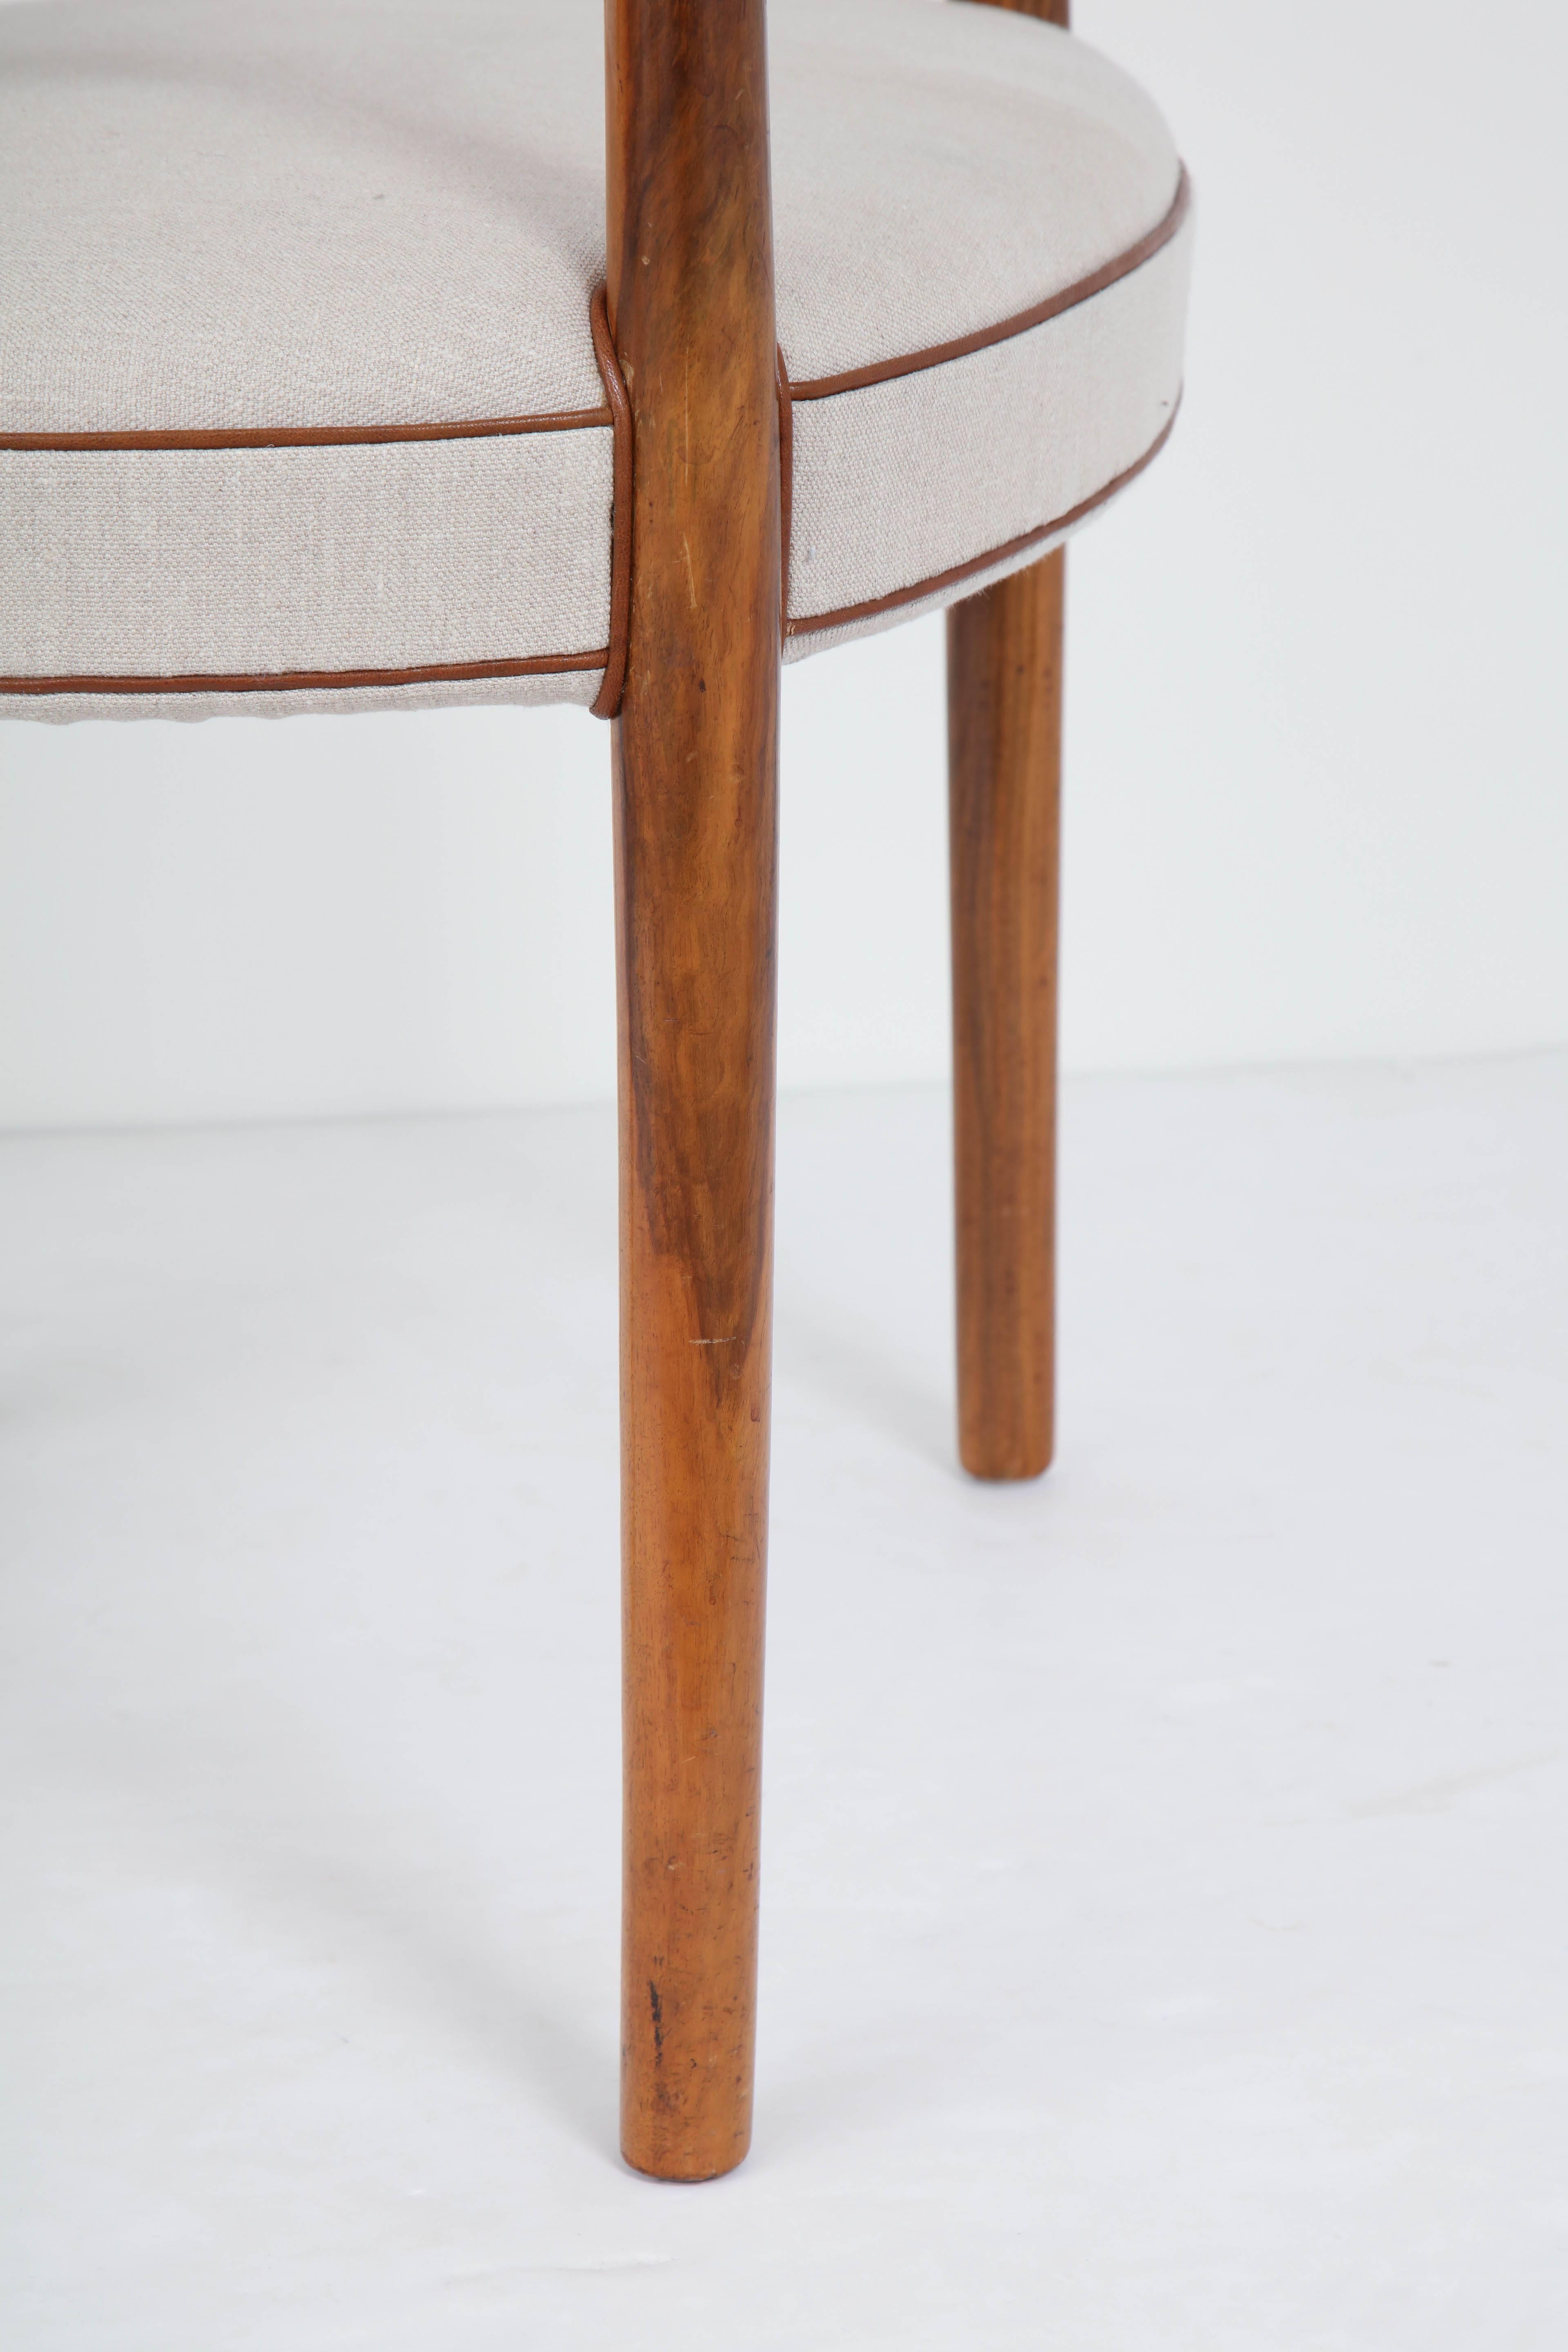 Rare Danish Design Chair by Flemming Lassen and Arne Jacobsen, circa 1950s 2